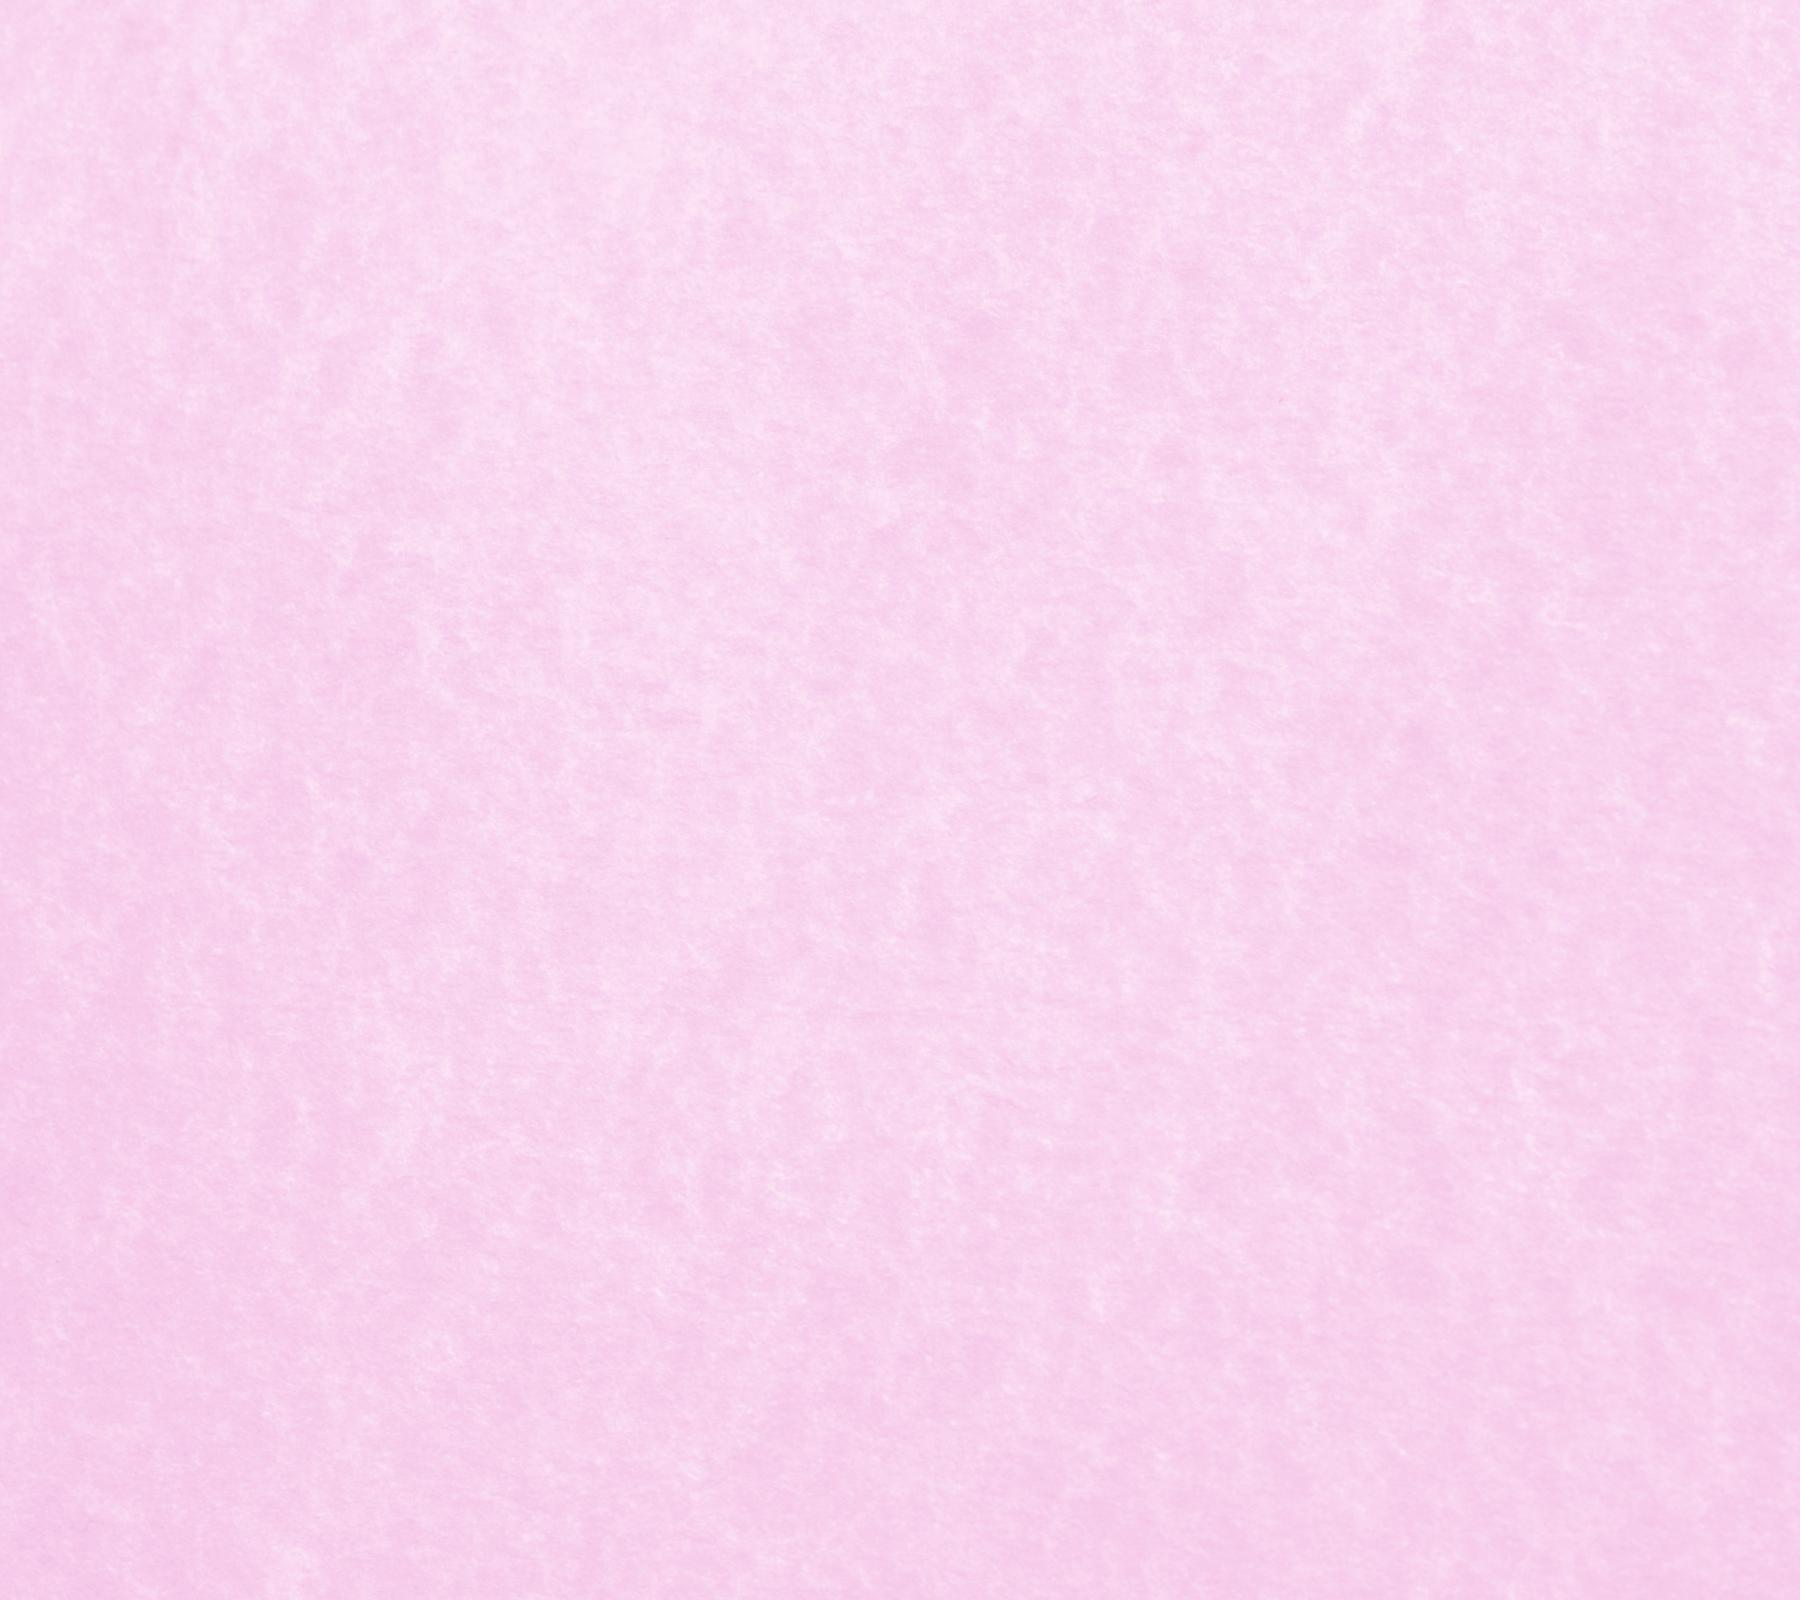 Plain pink wallpaper